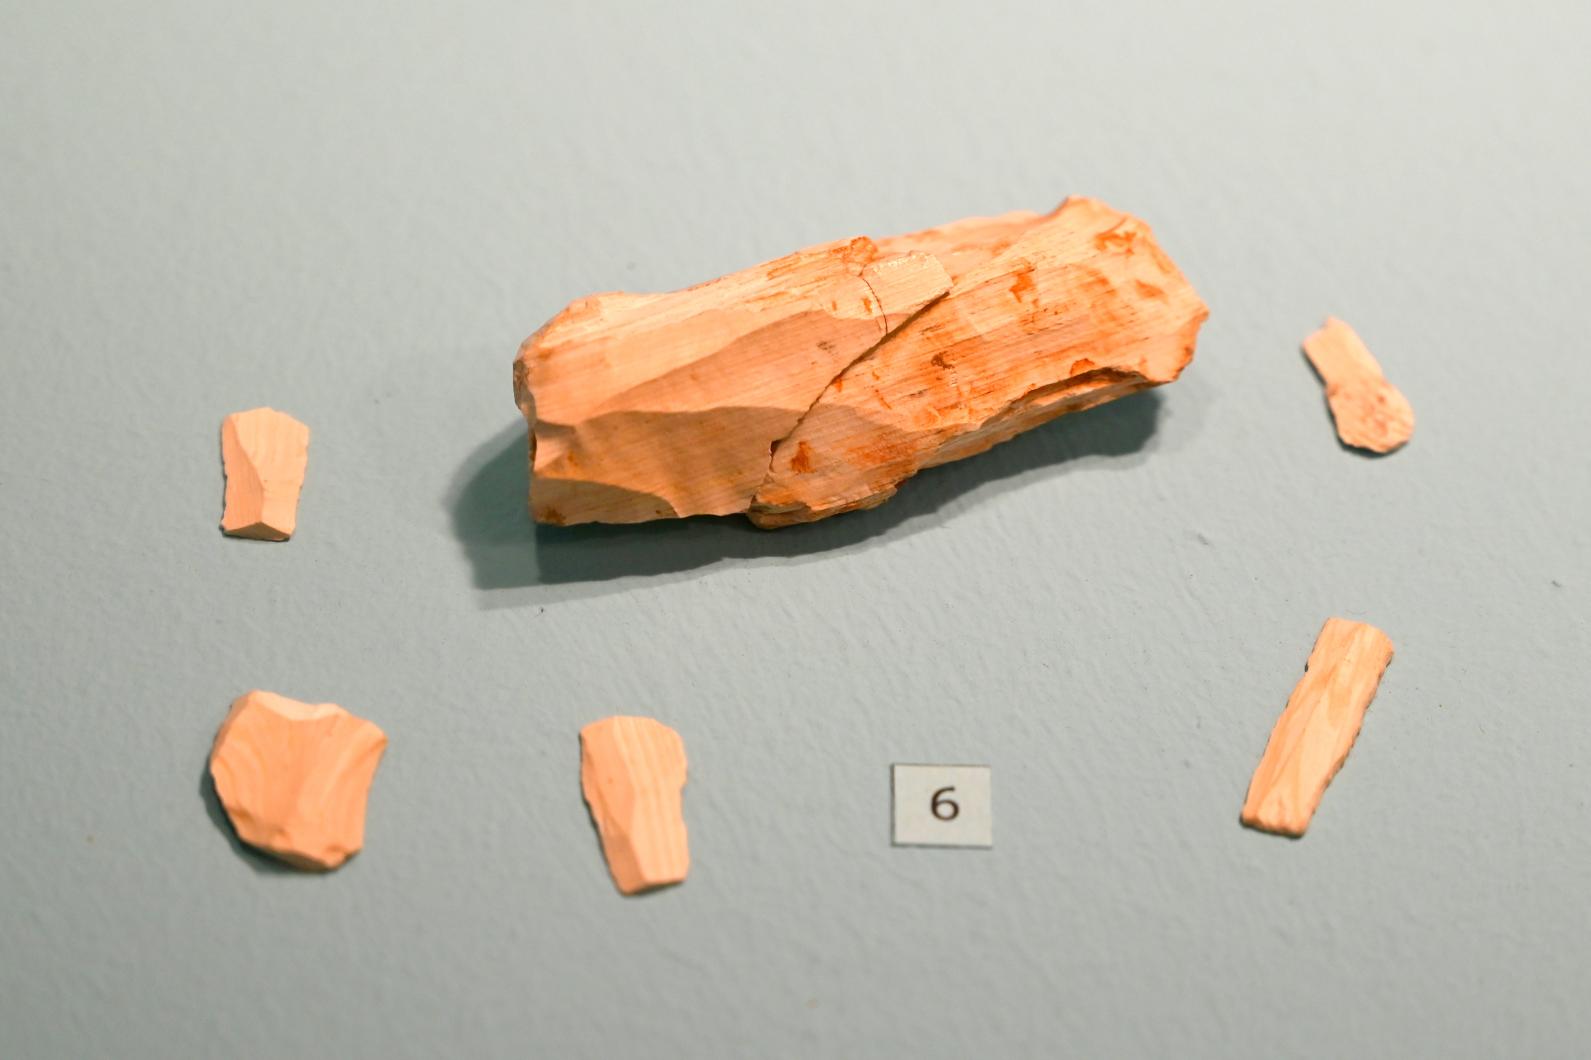 Rückenmesser, 23000 v. Chr.